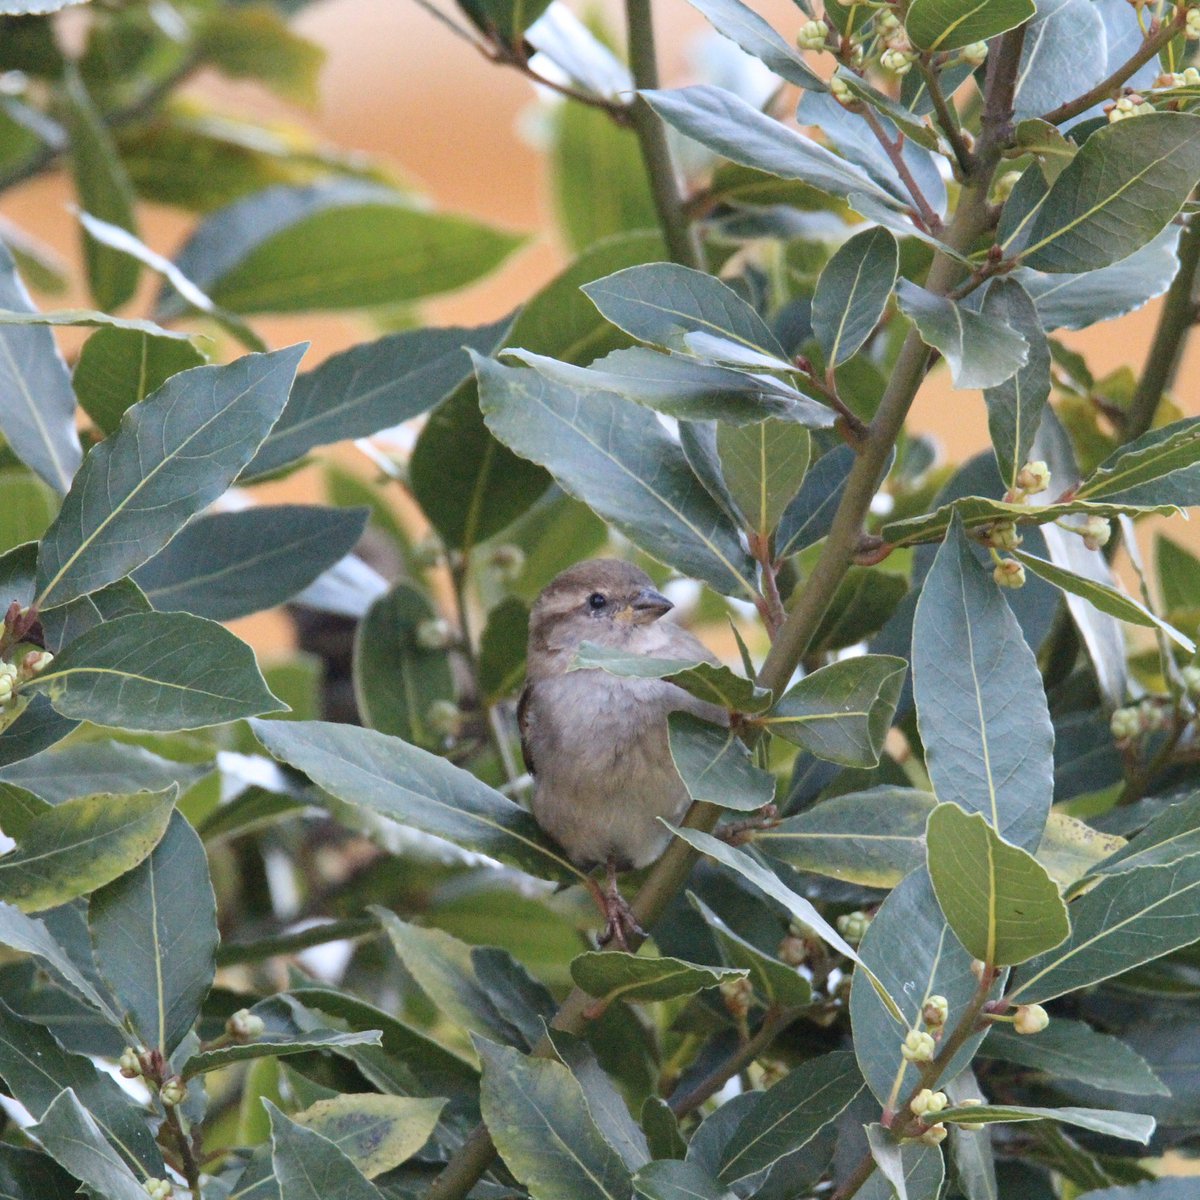 Day two. Male House SparrowFemale House Sparrow PigeonMagpie  #GardenWildlife  #QuarantineWildlife  #WildlifePhotography